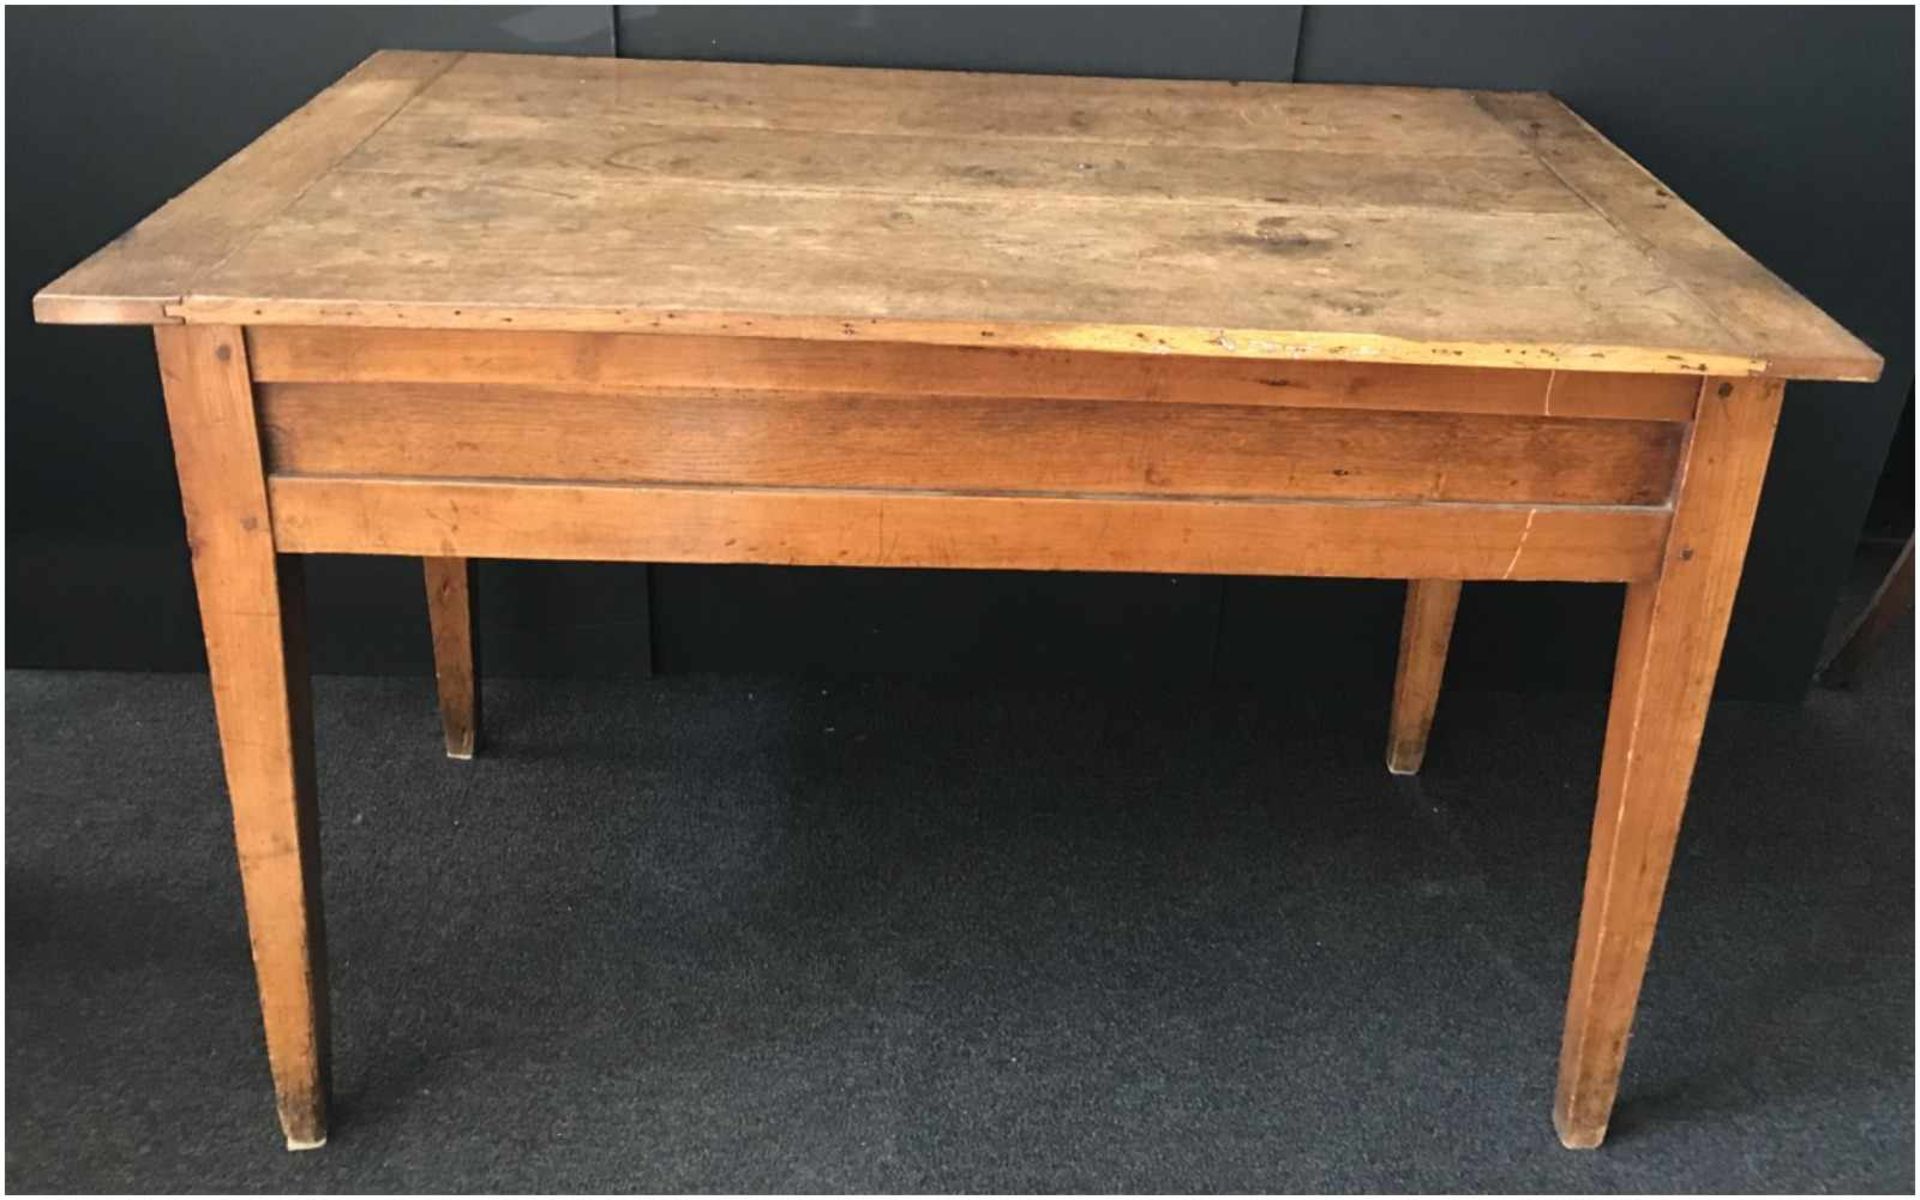 Rural antique table